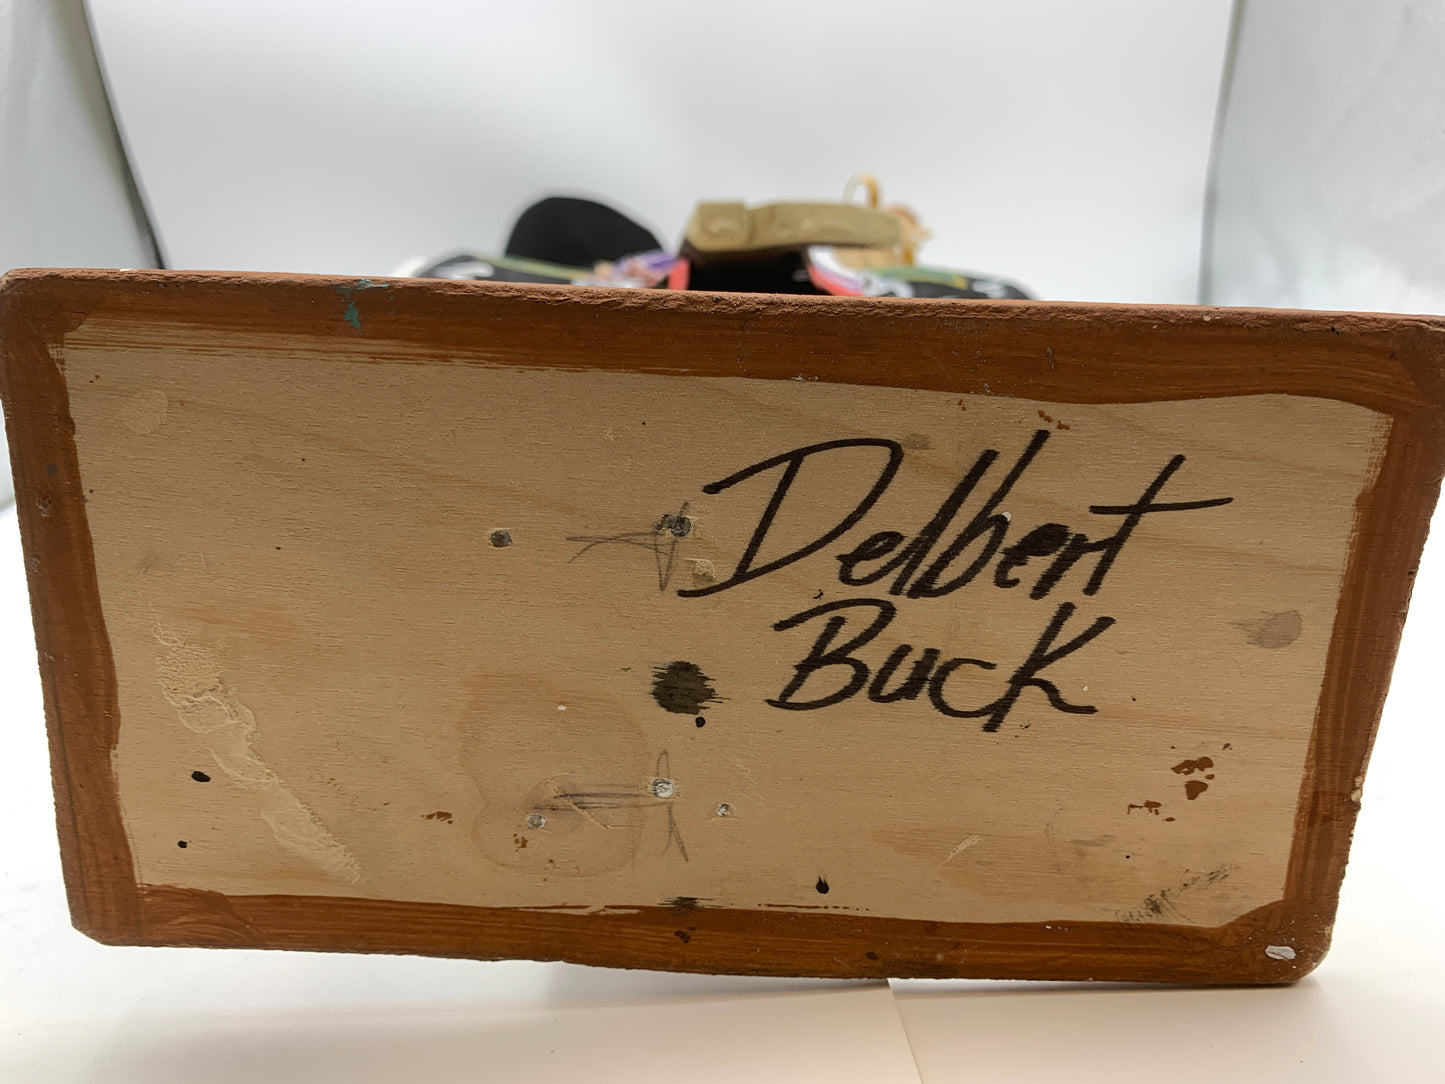 Delbert Buck Ostrich Rider #0019